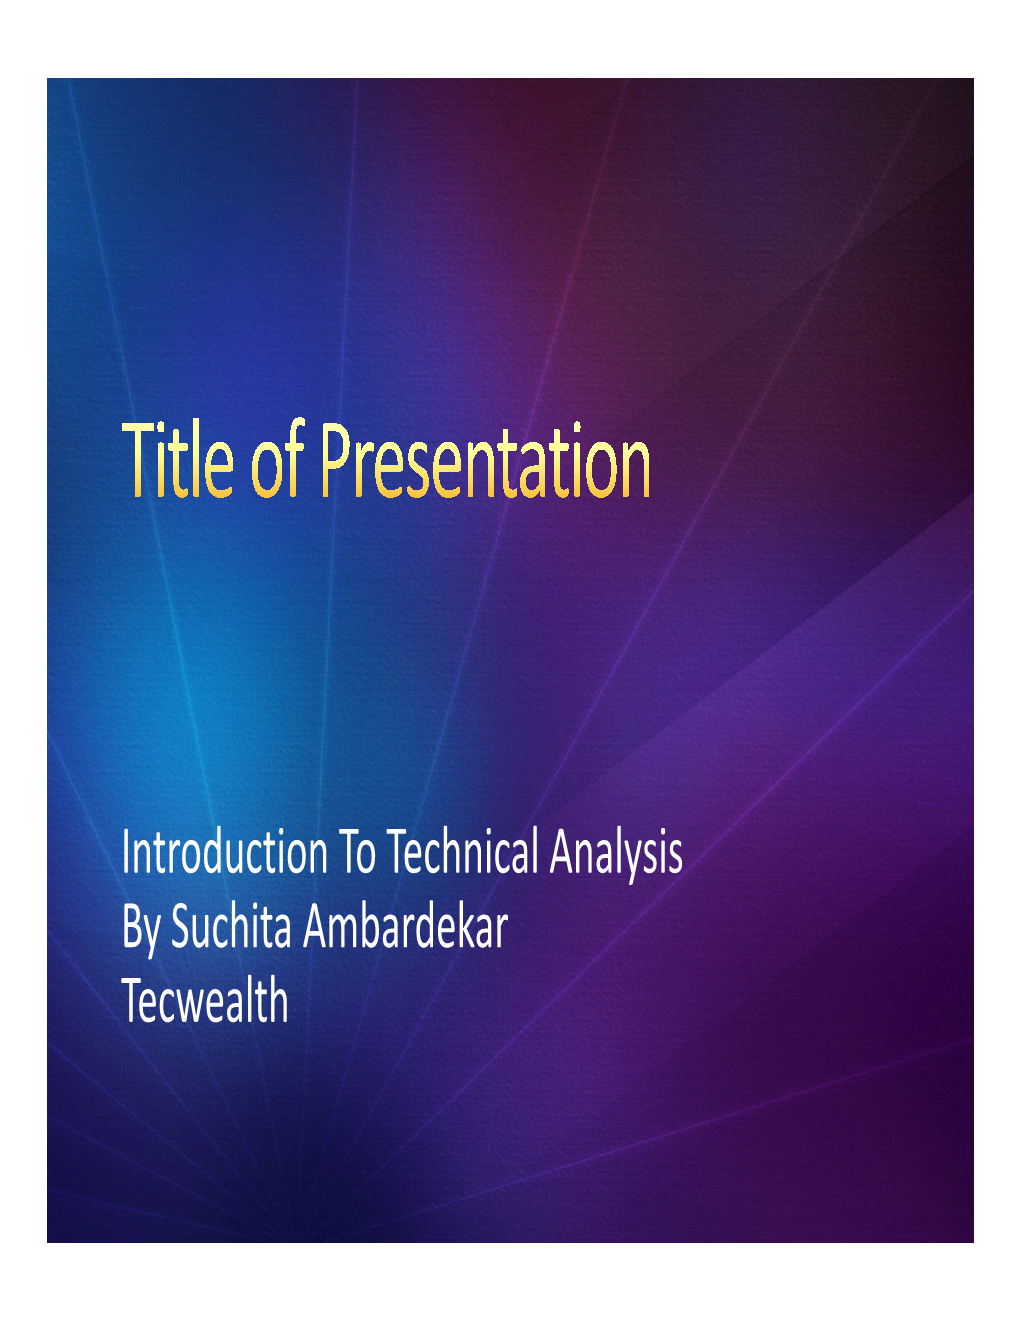 Introduction to Technical Analysis by Suchita Ambardekar Tecwealth